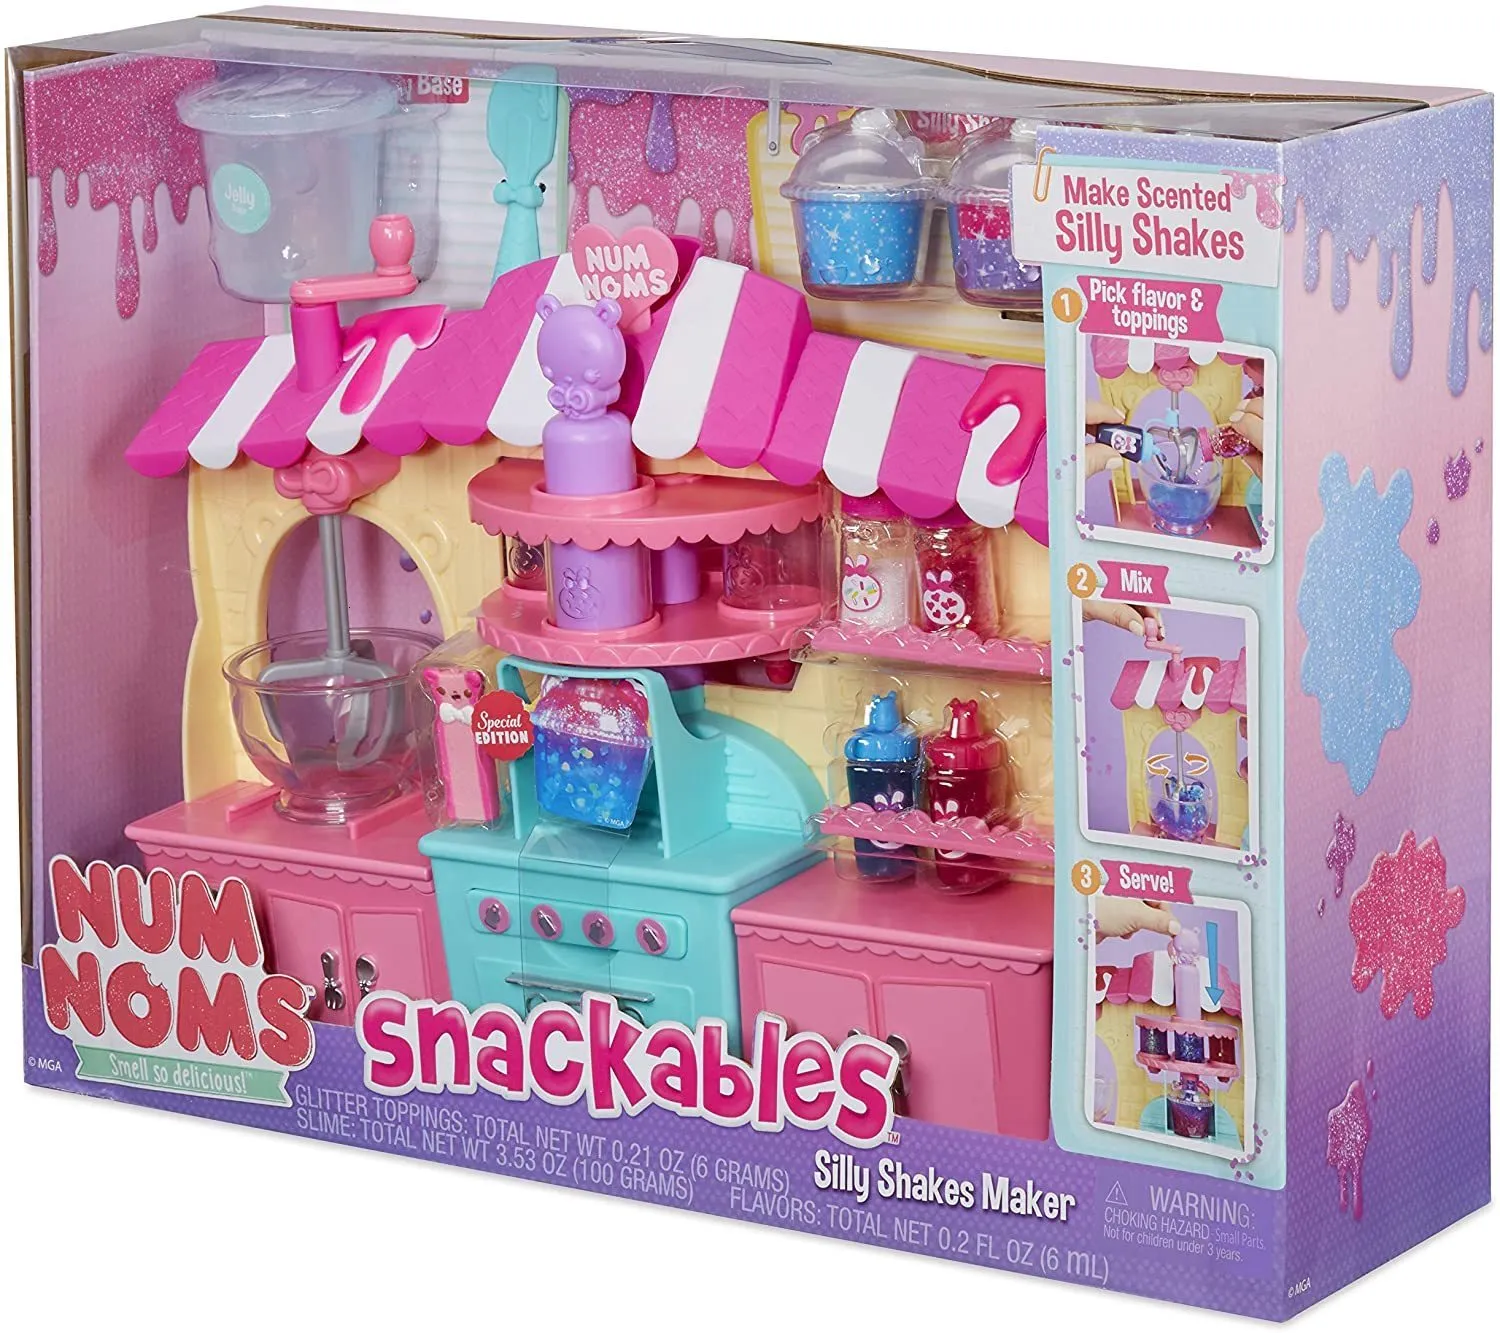 Doll Bodies Original Noms Slime So Delicious Surprise Toys For